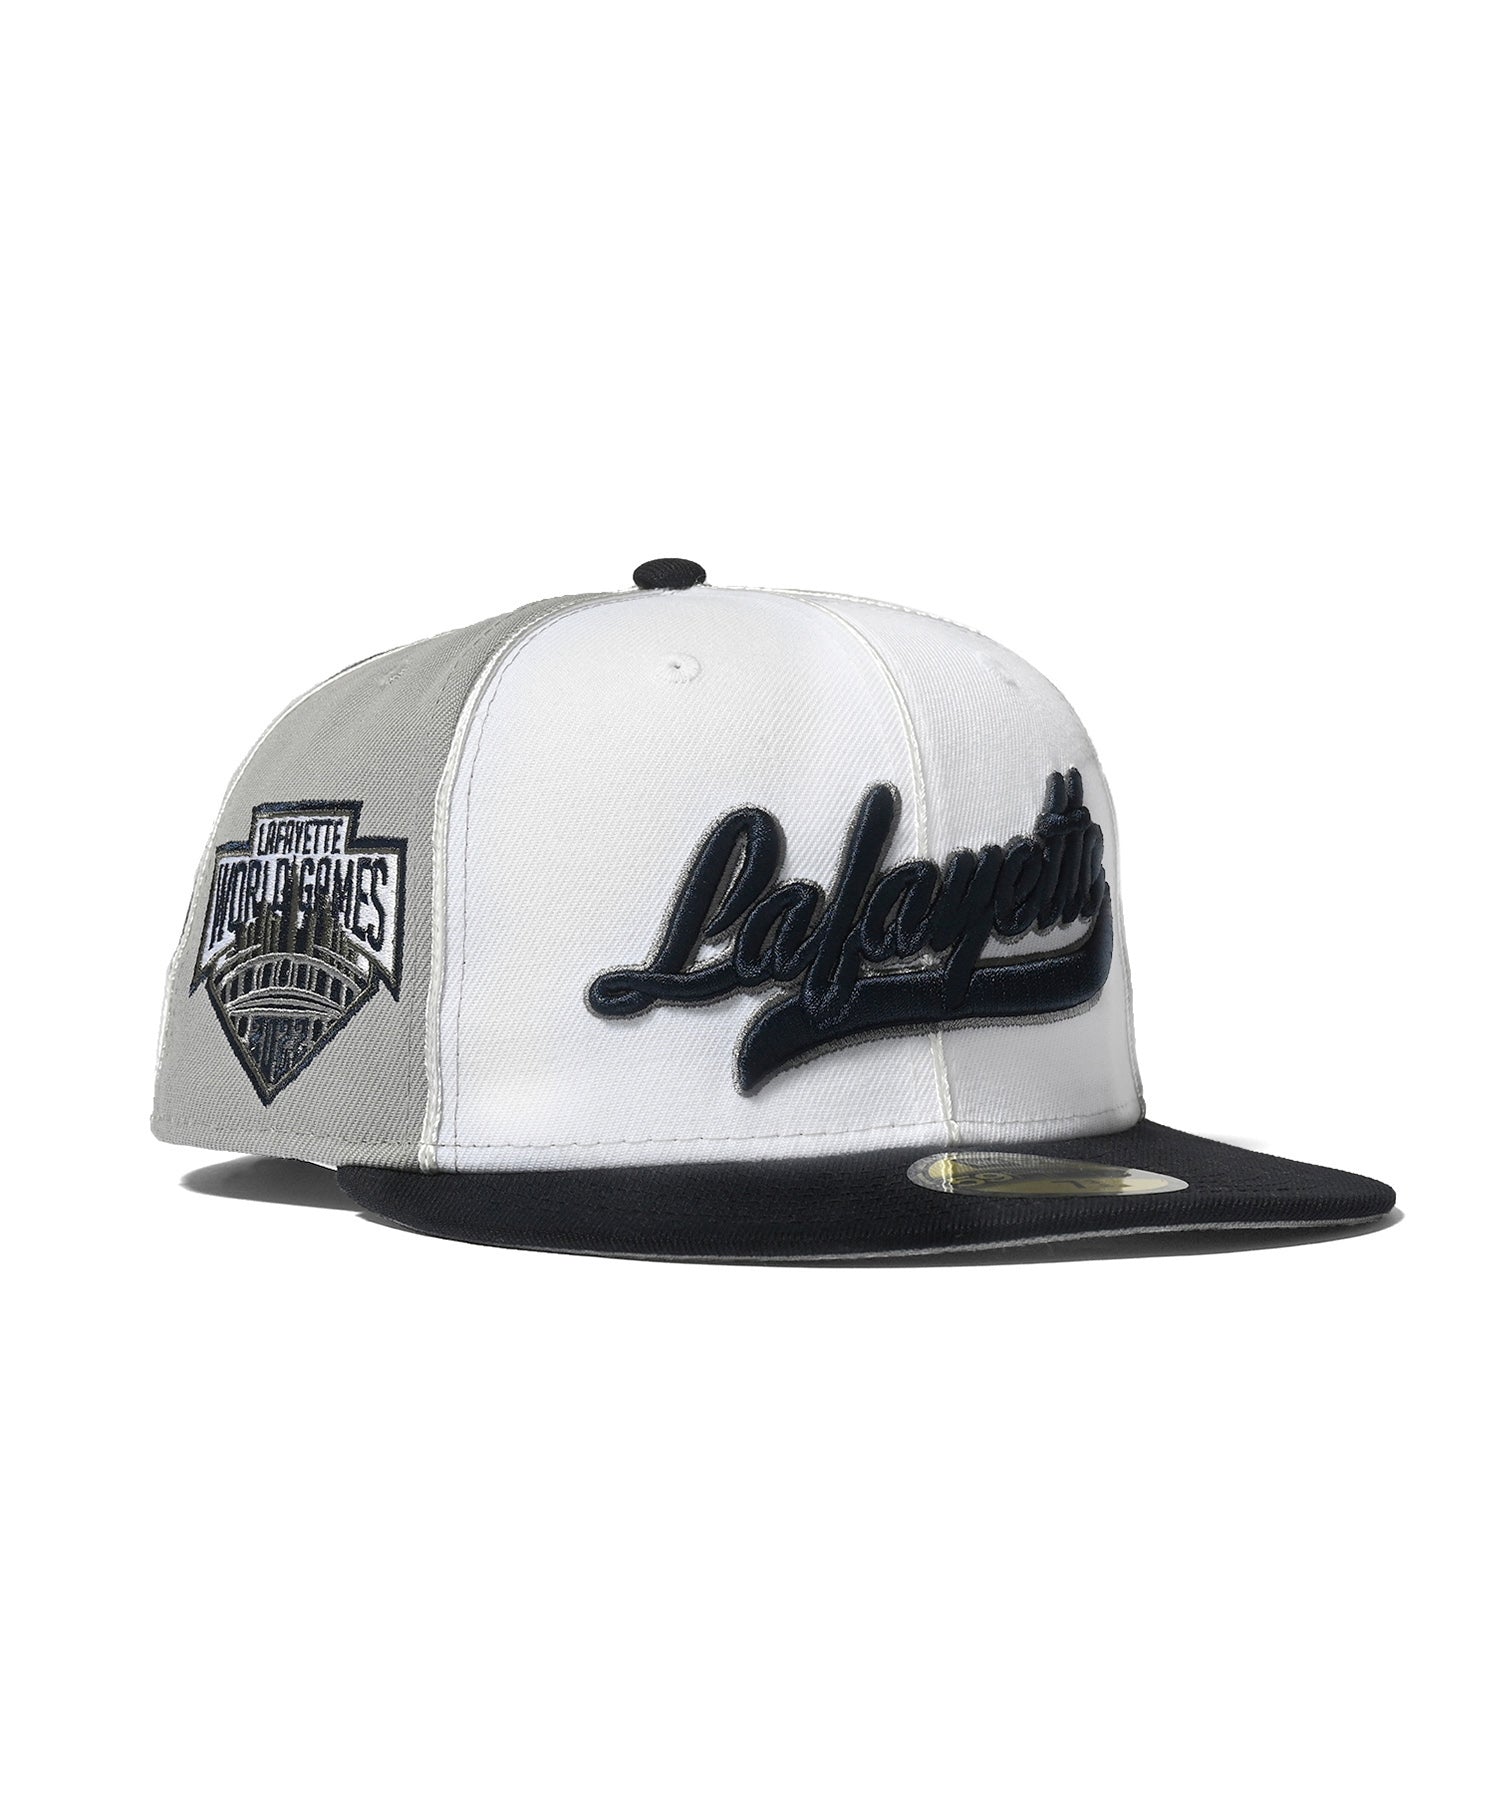 LFYT x New Era 3 Tone LF Logo 59fifty Fitted Hat